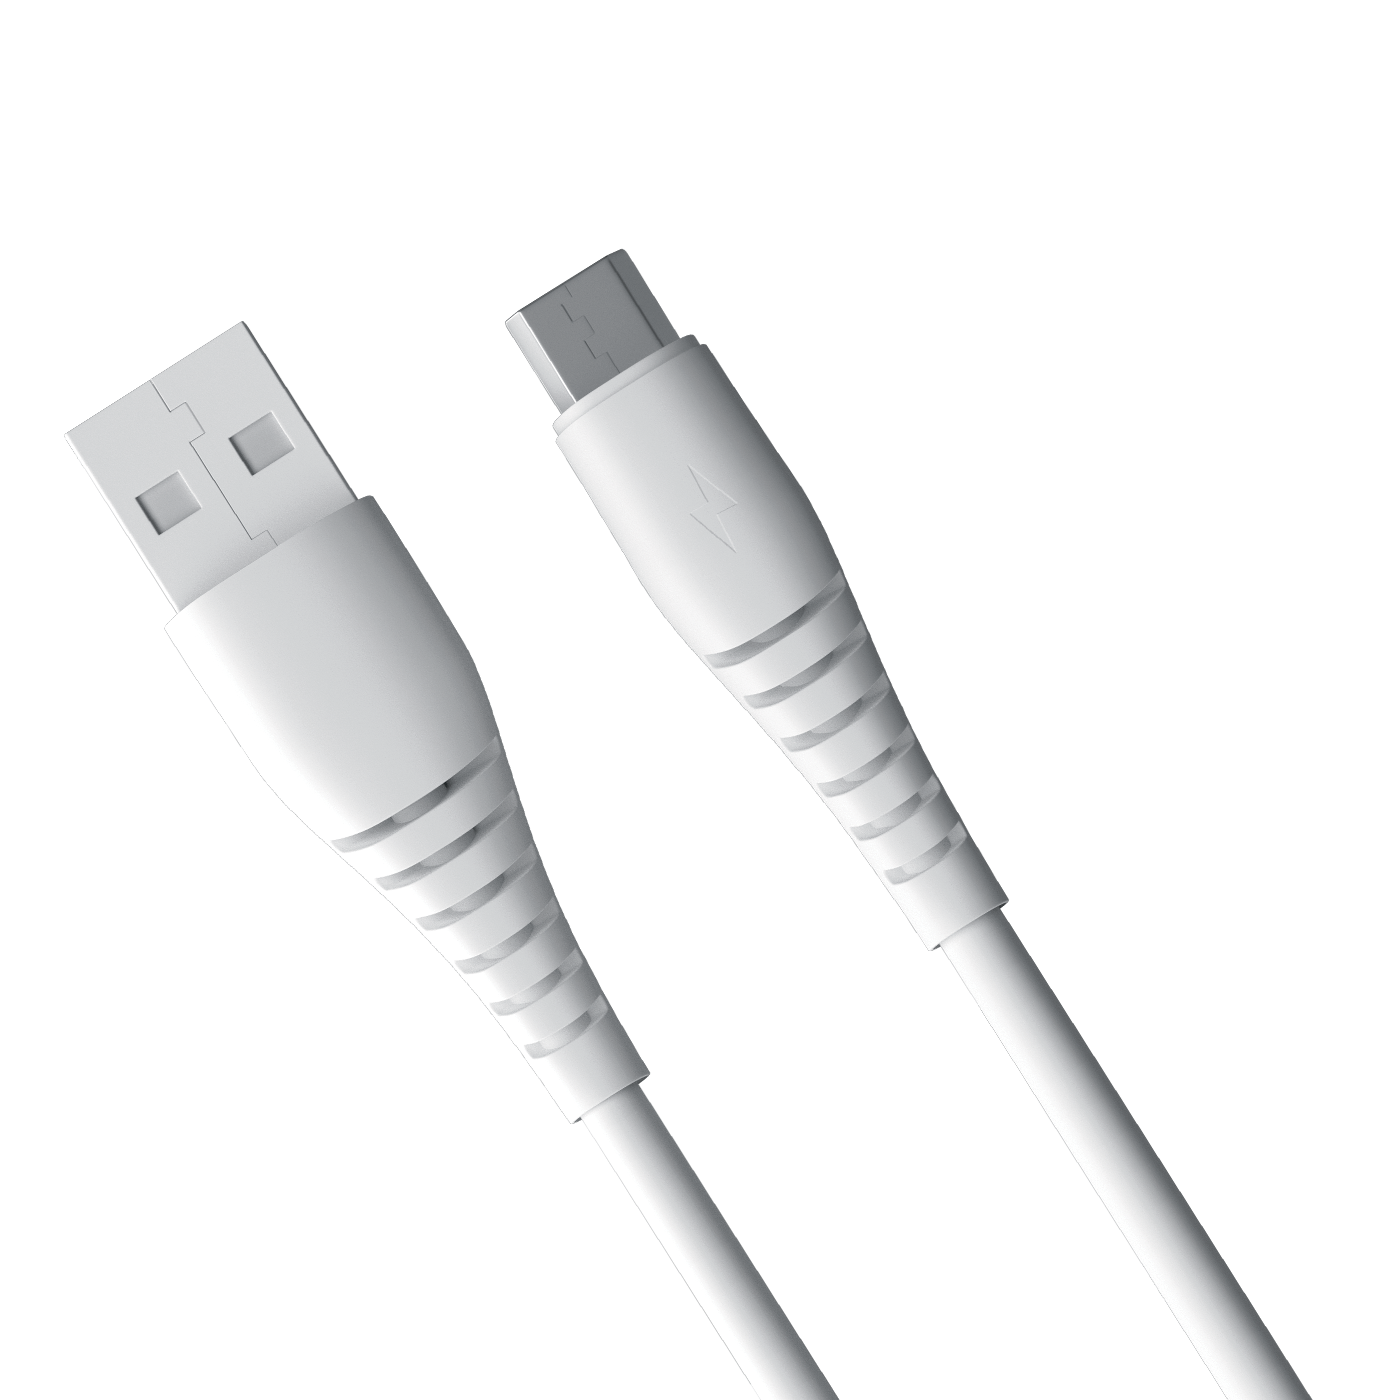 Кабель Red Line USB to microUSB 1m White